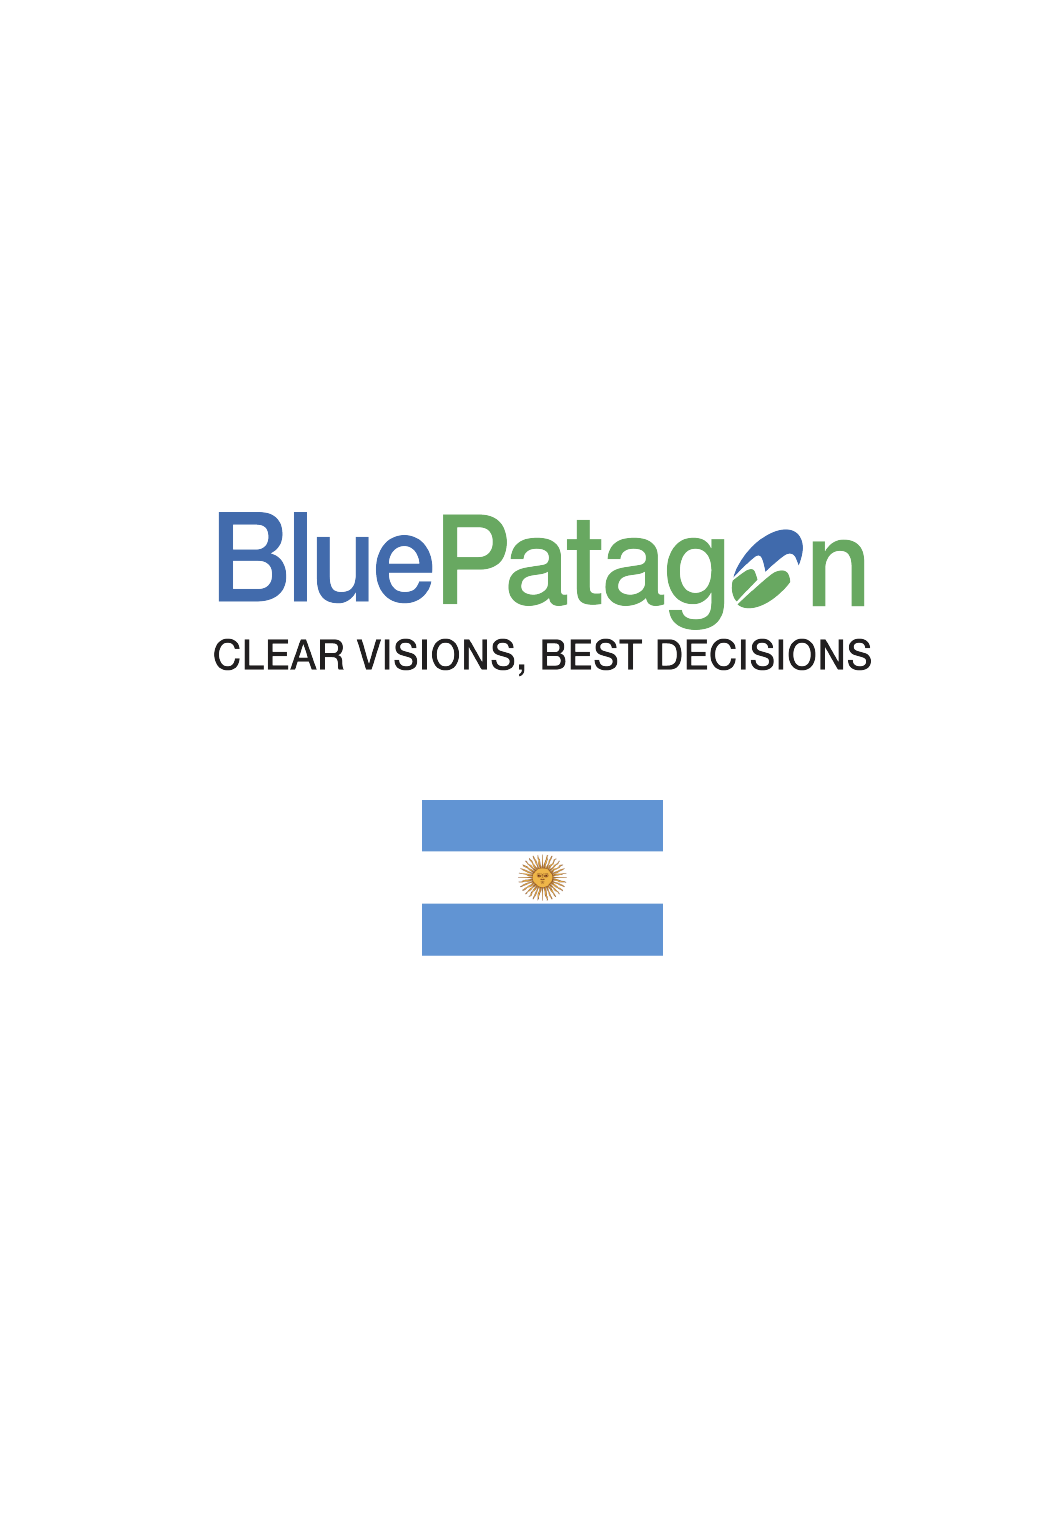 Bluepatagon